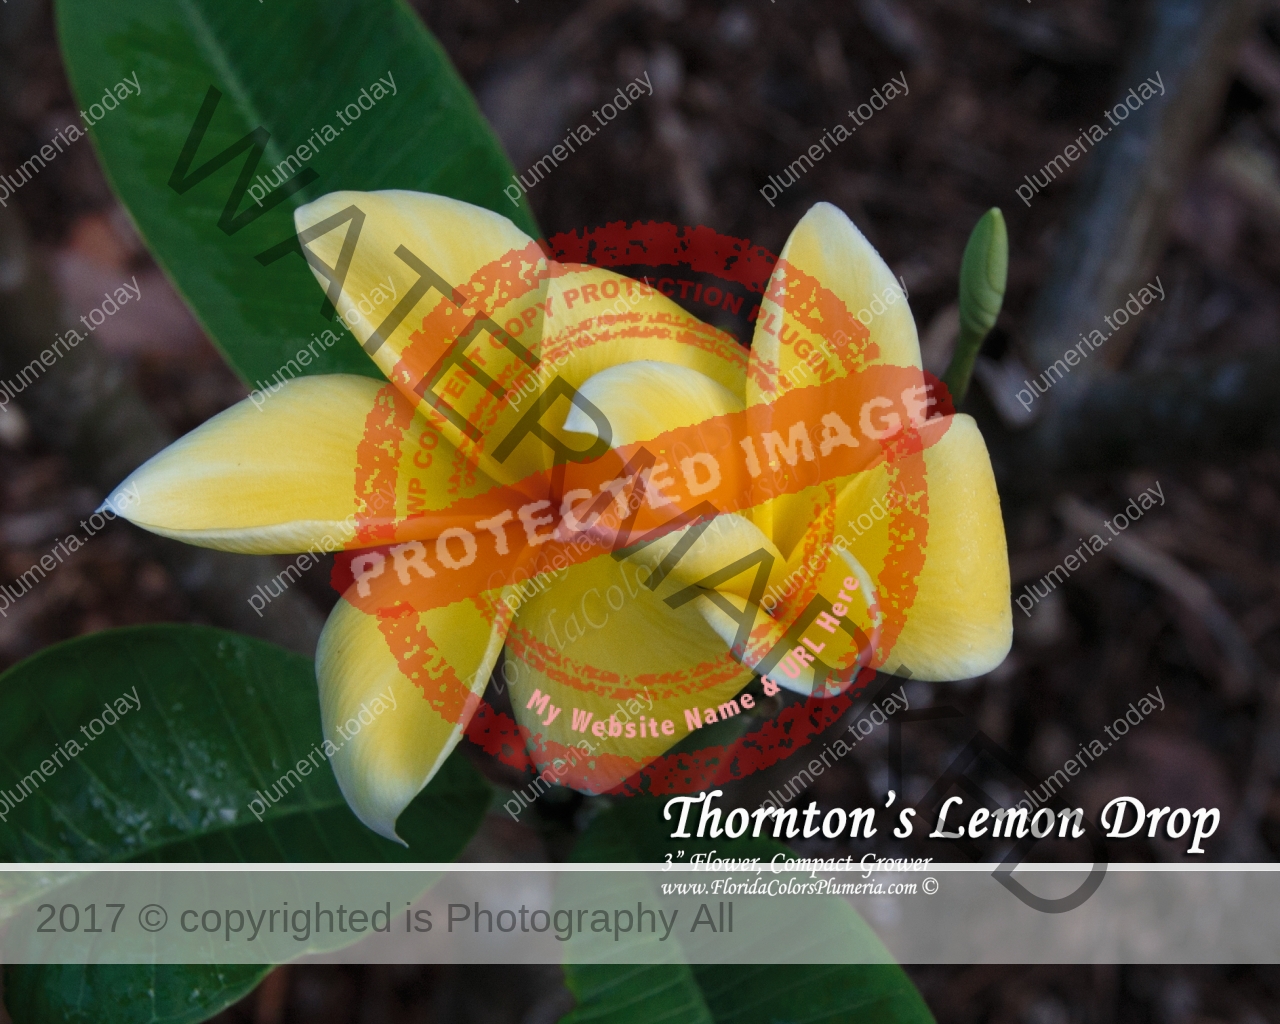 Thorntons-Lemon-Drop_9434.jpg